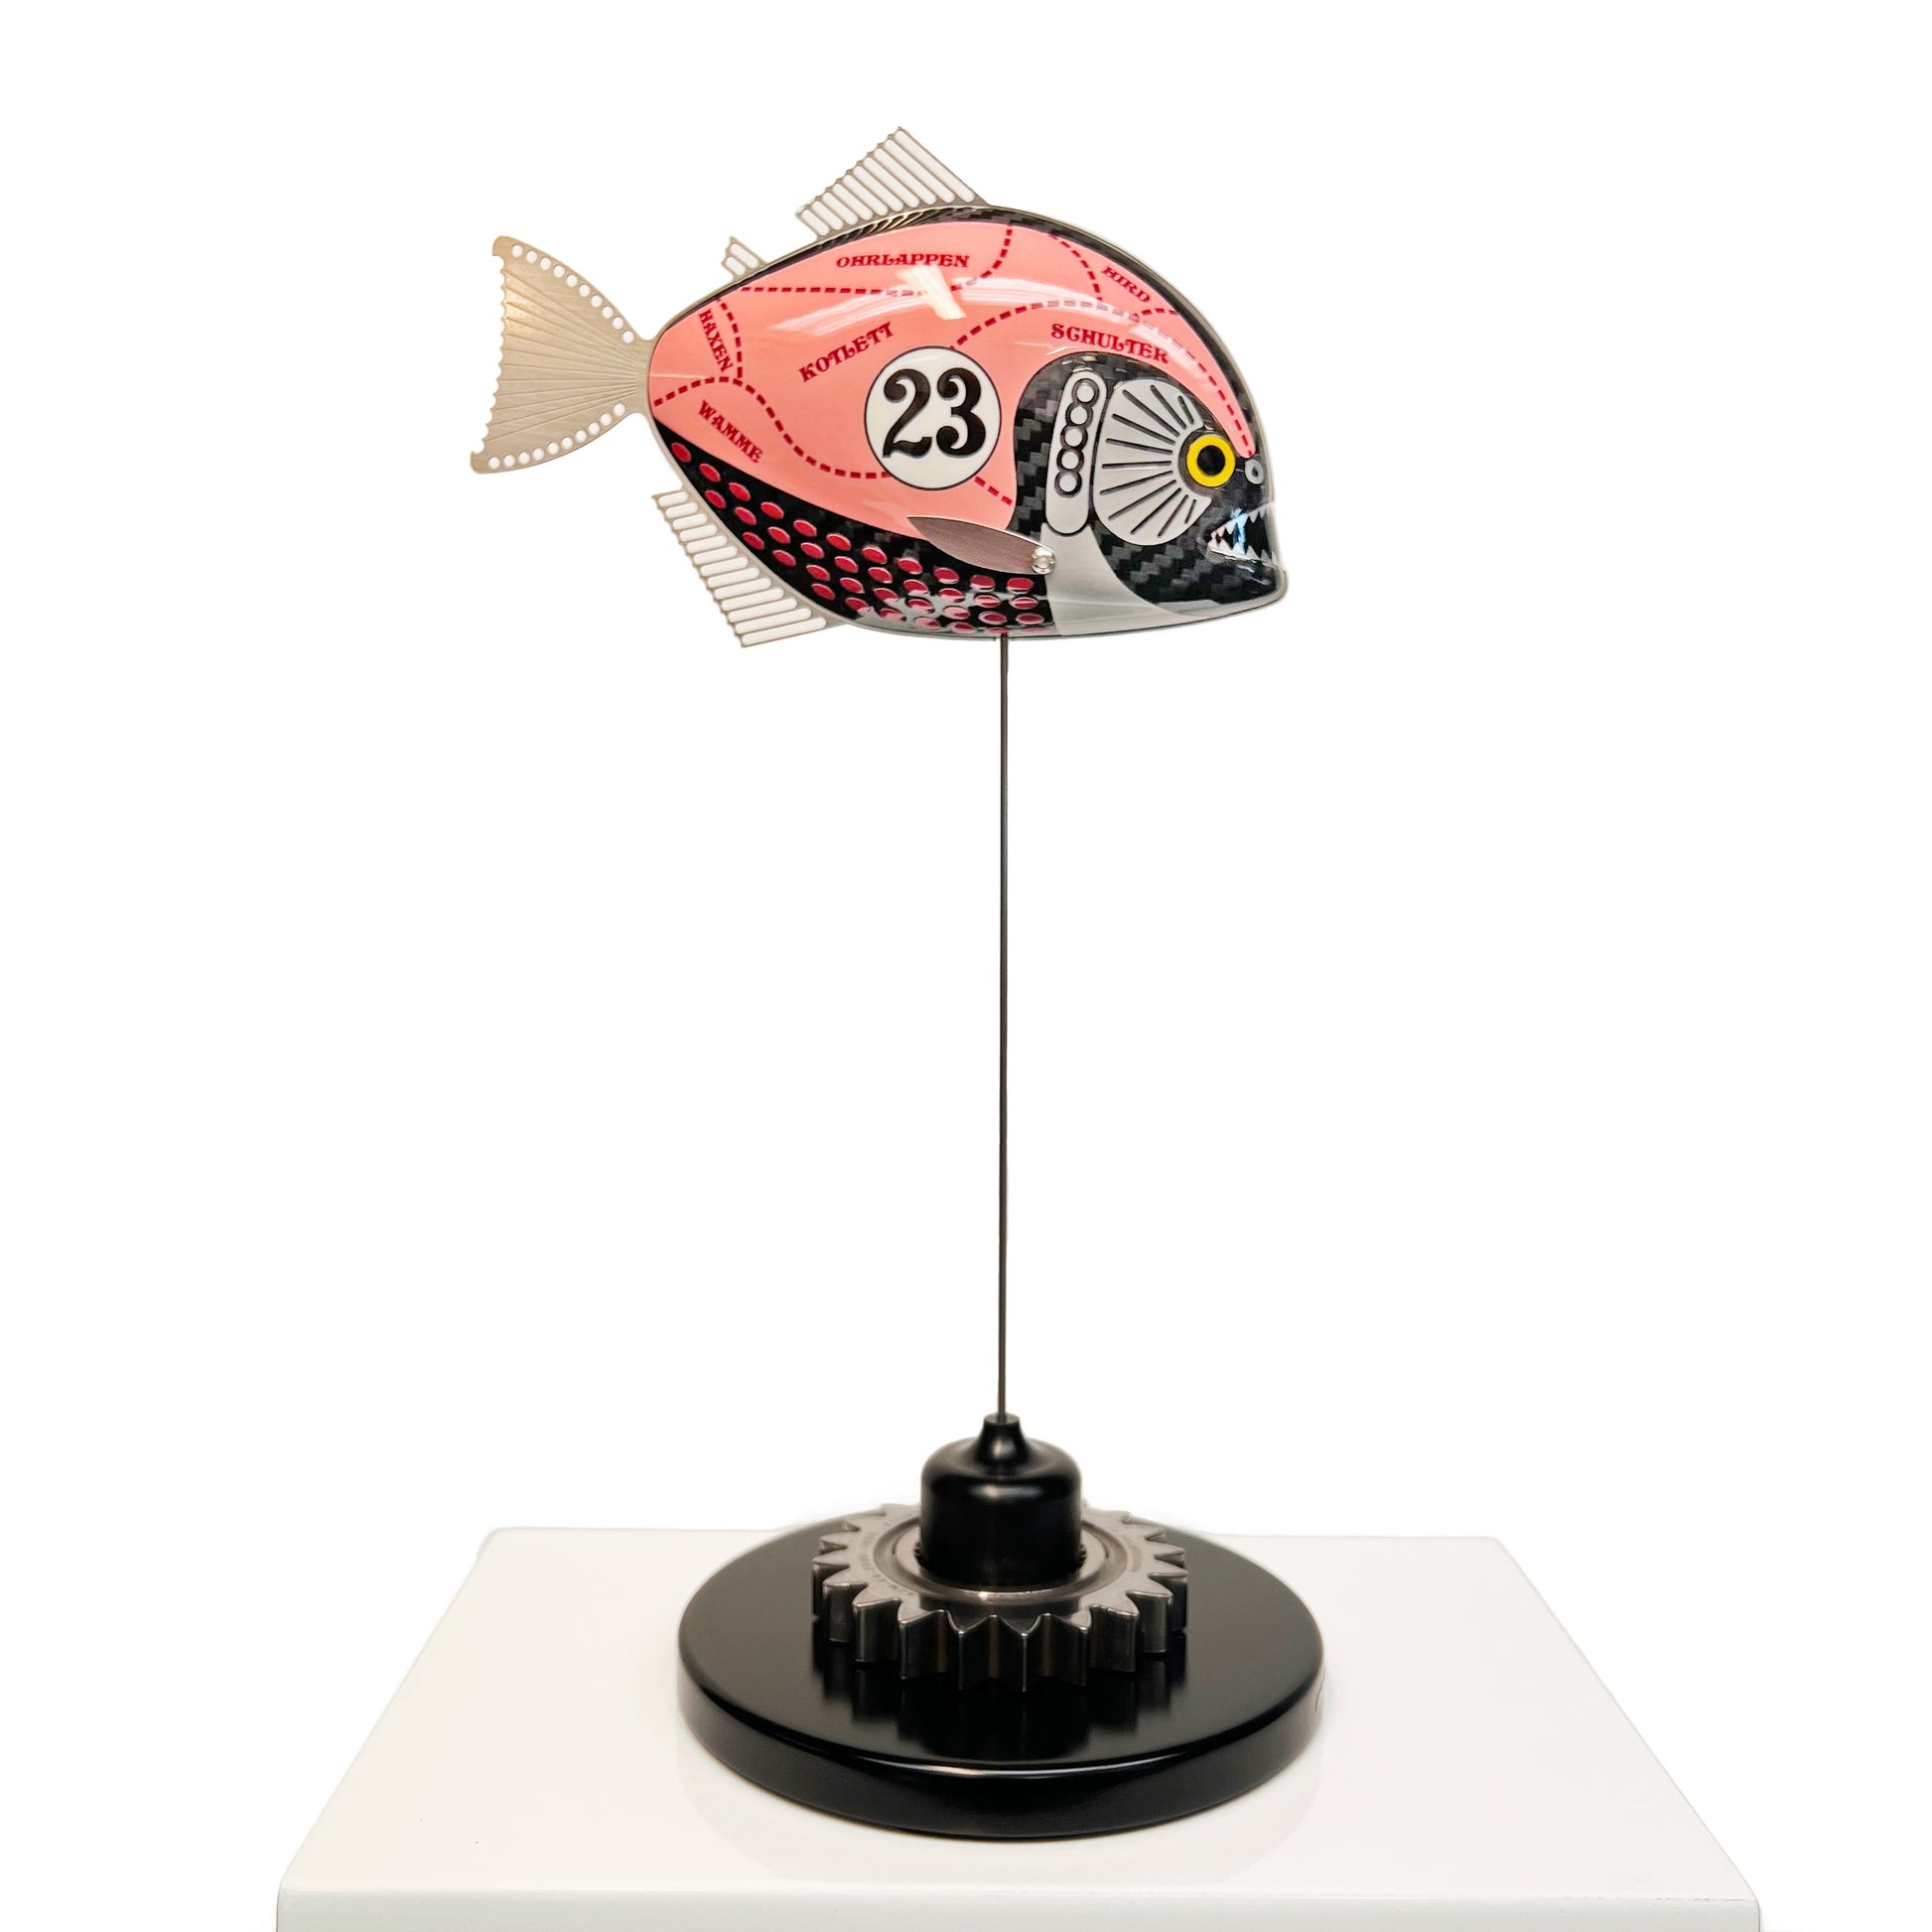 Carbon fibre piranha sculpture with Porsche Pink Pig livery on a black base with F1 gear